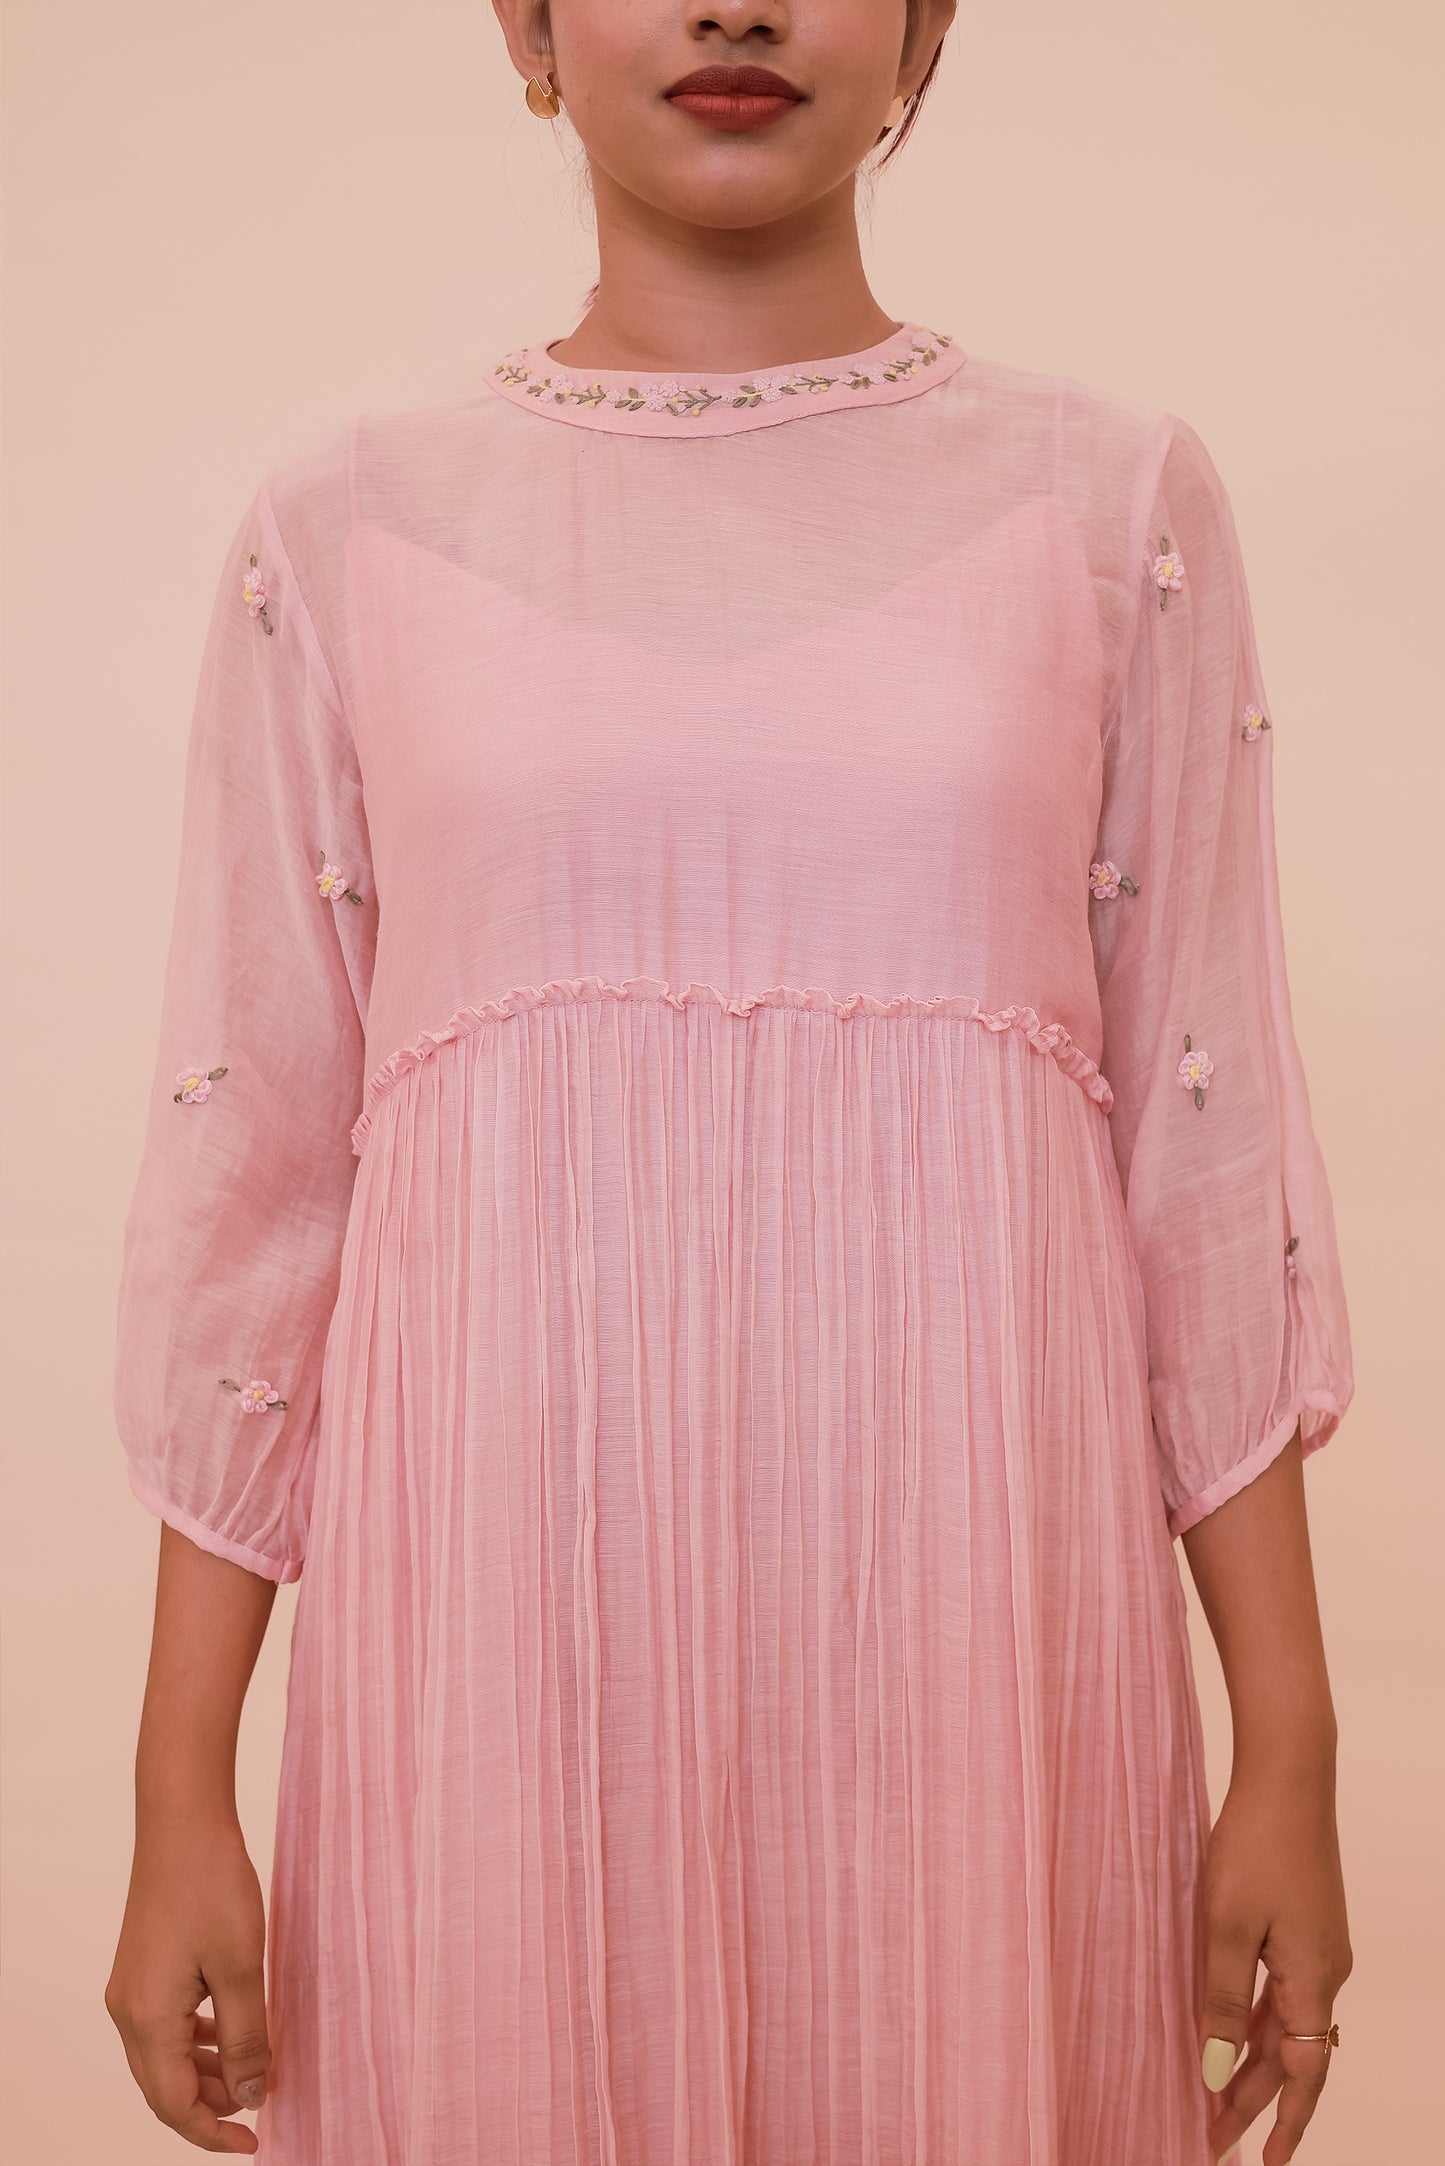 Pastel pink tier dress